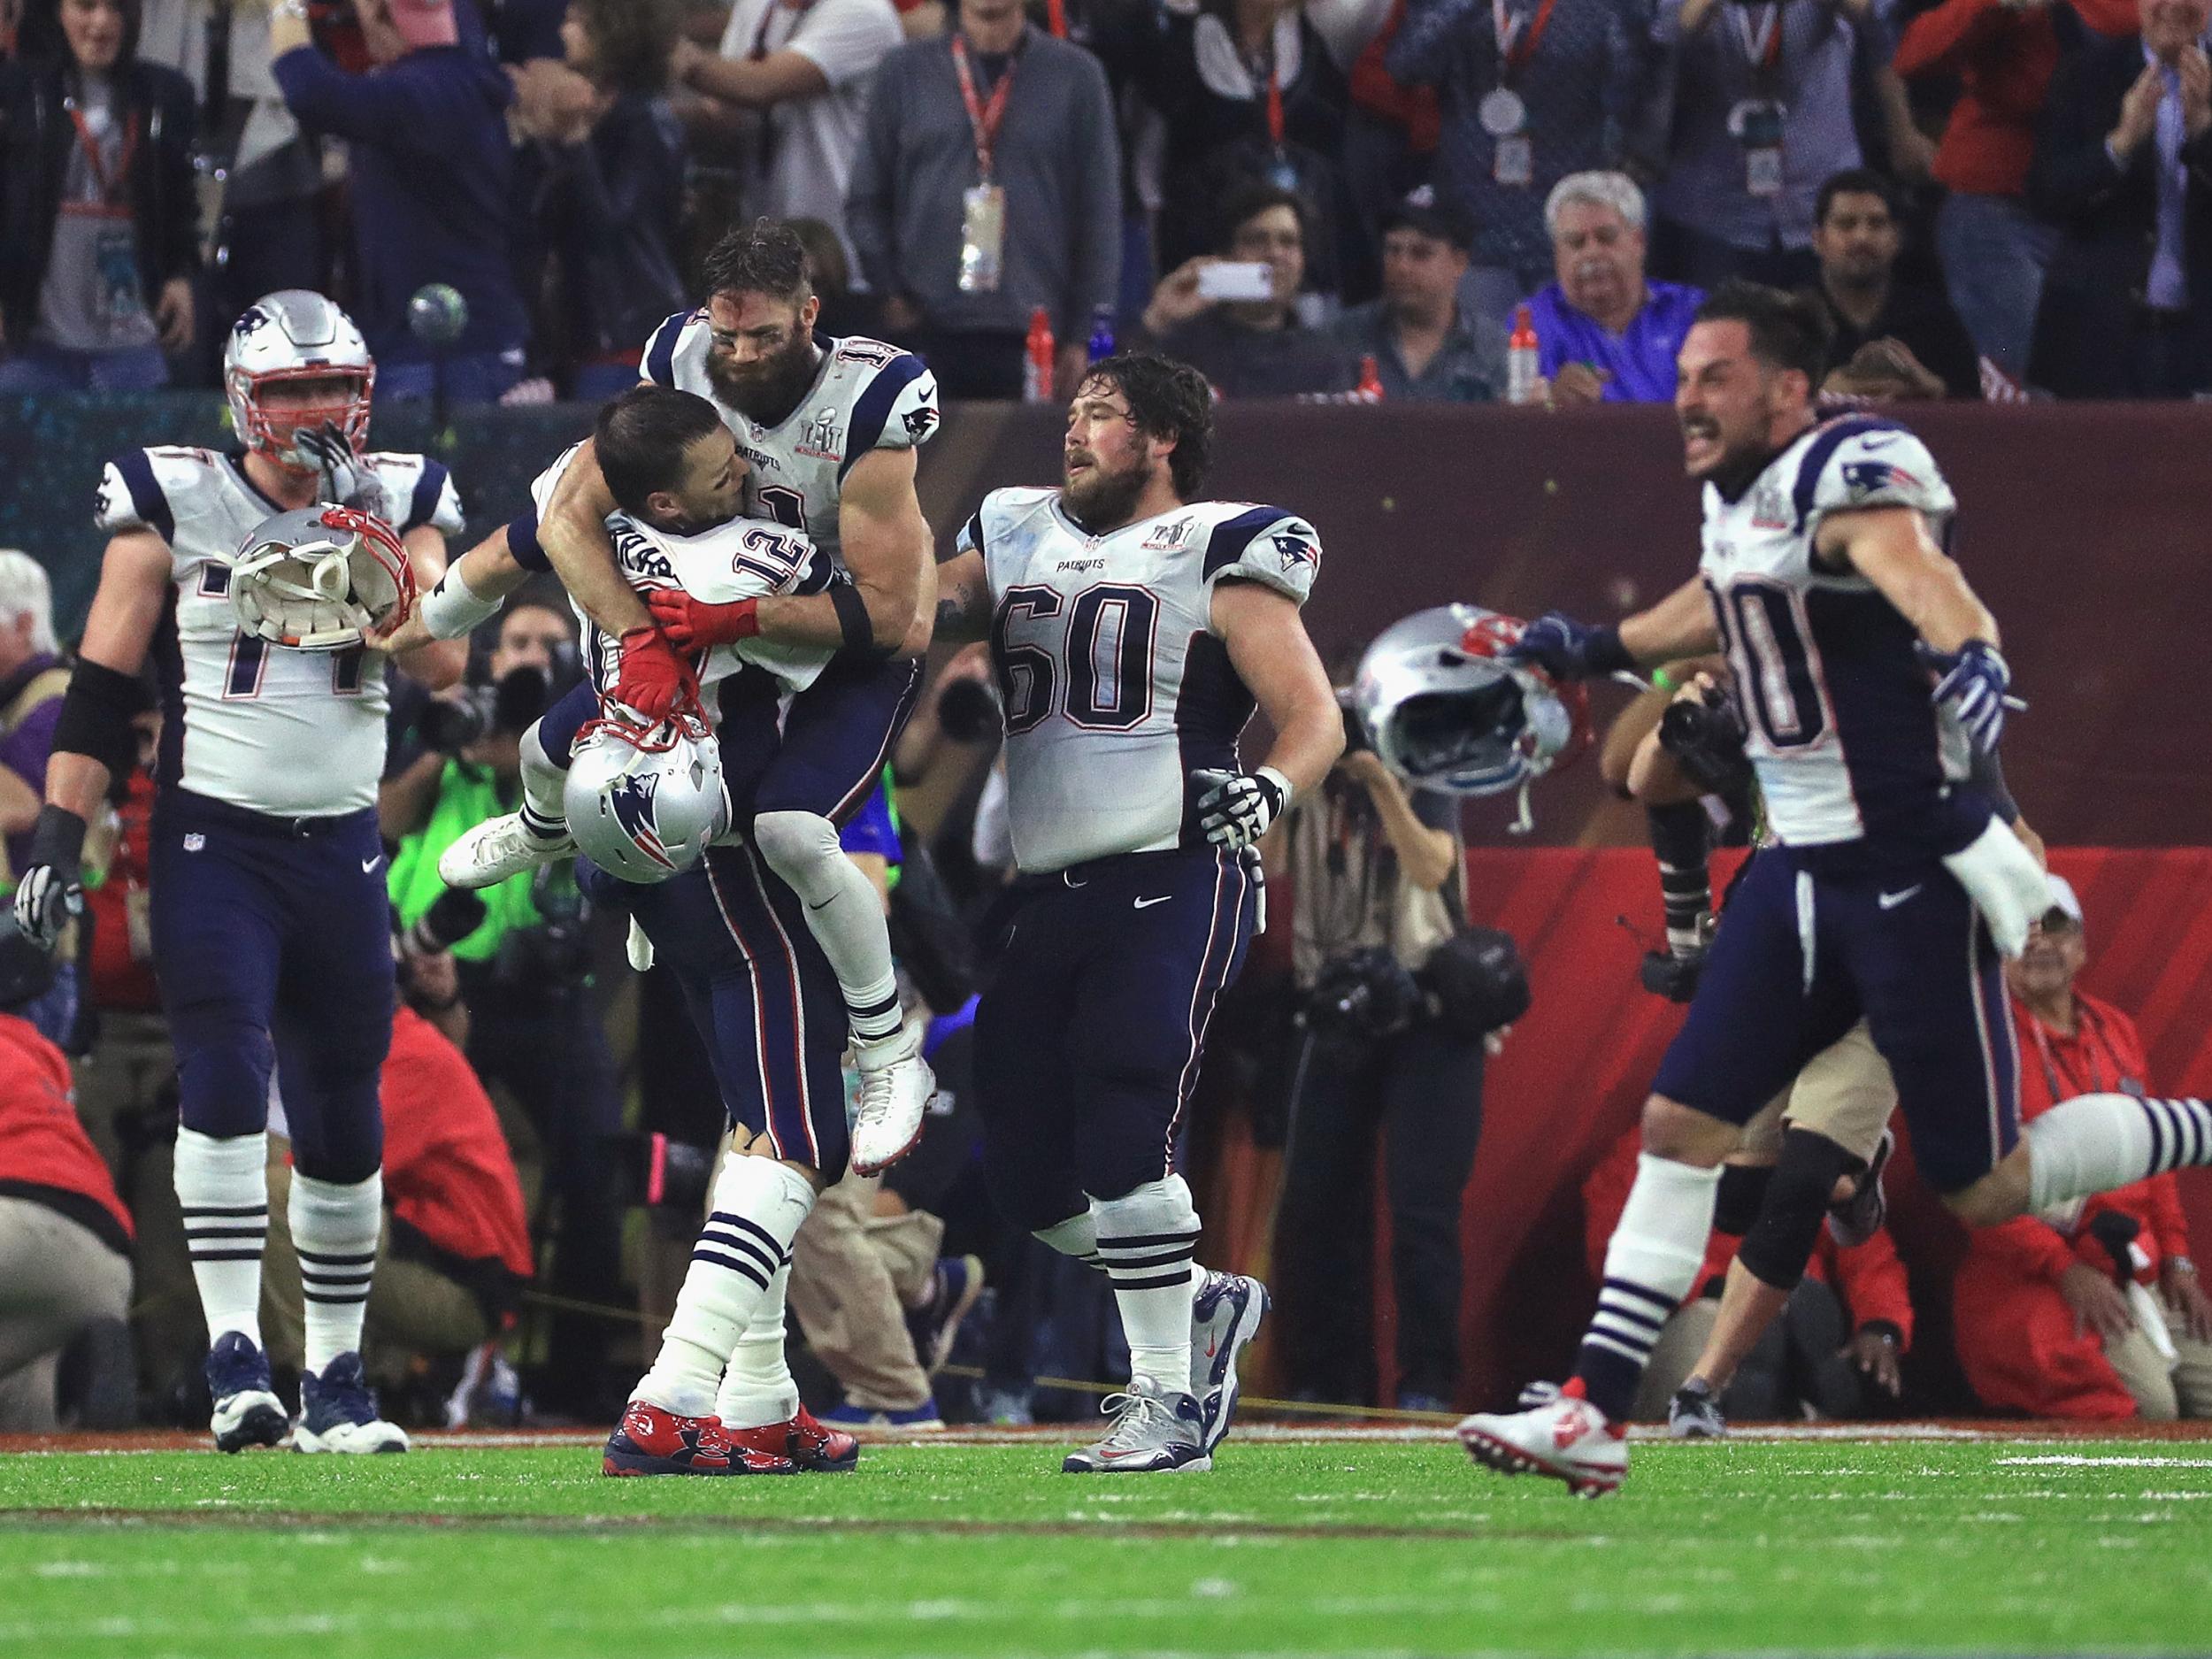 The Patriots celebrate winning Super Bowl 51